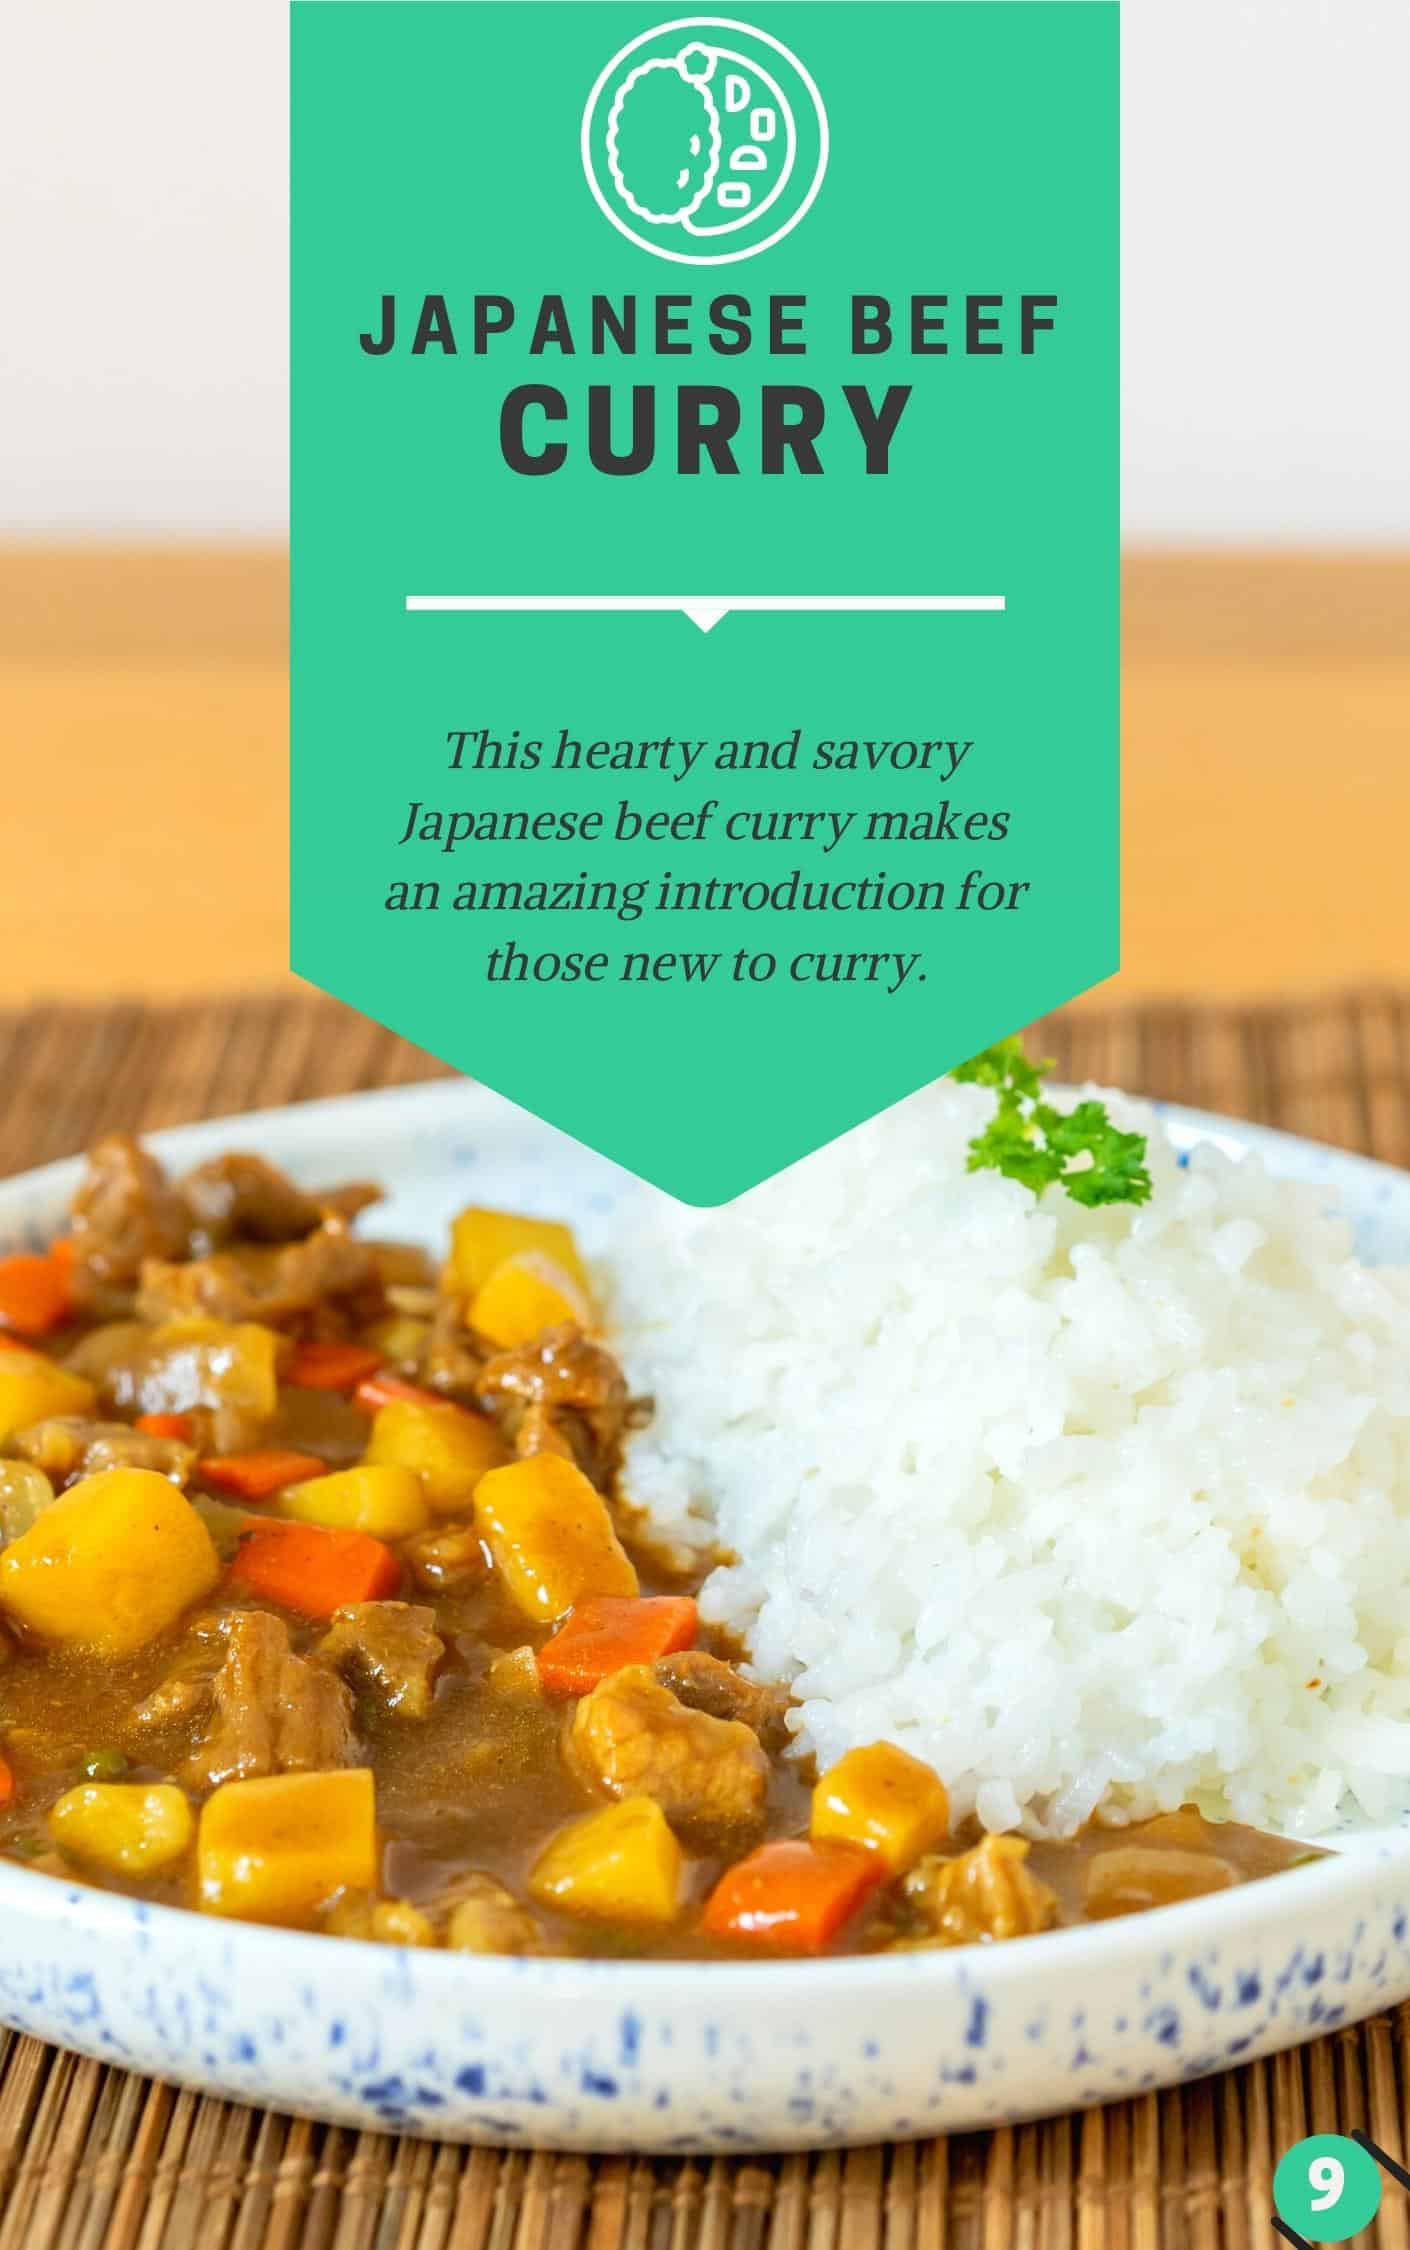 Receta japonesa de curry de ternera